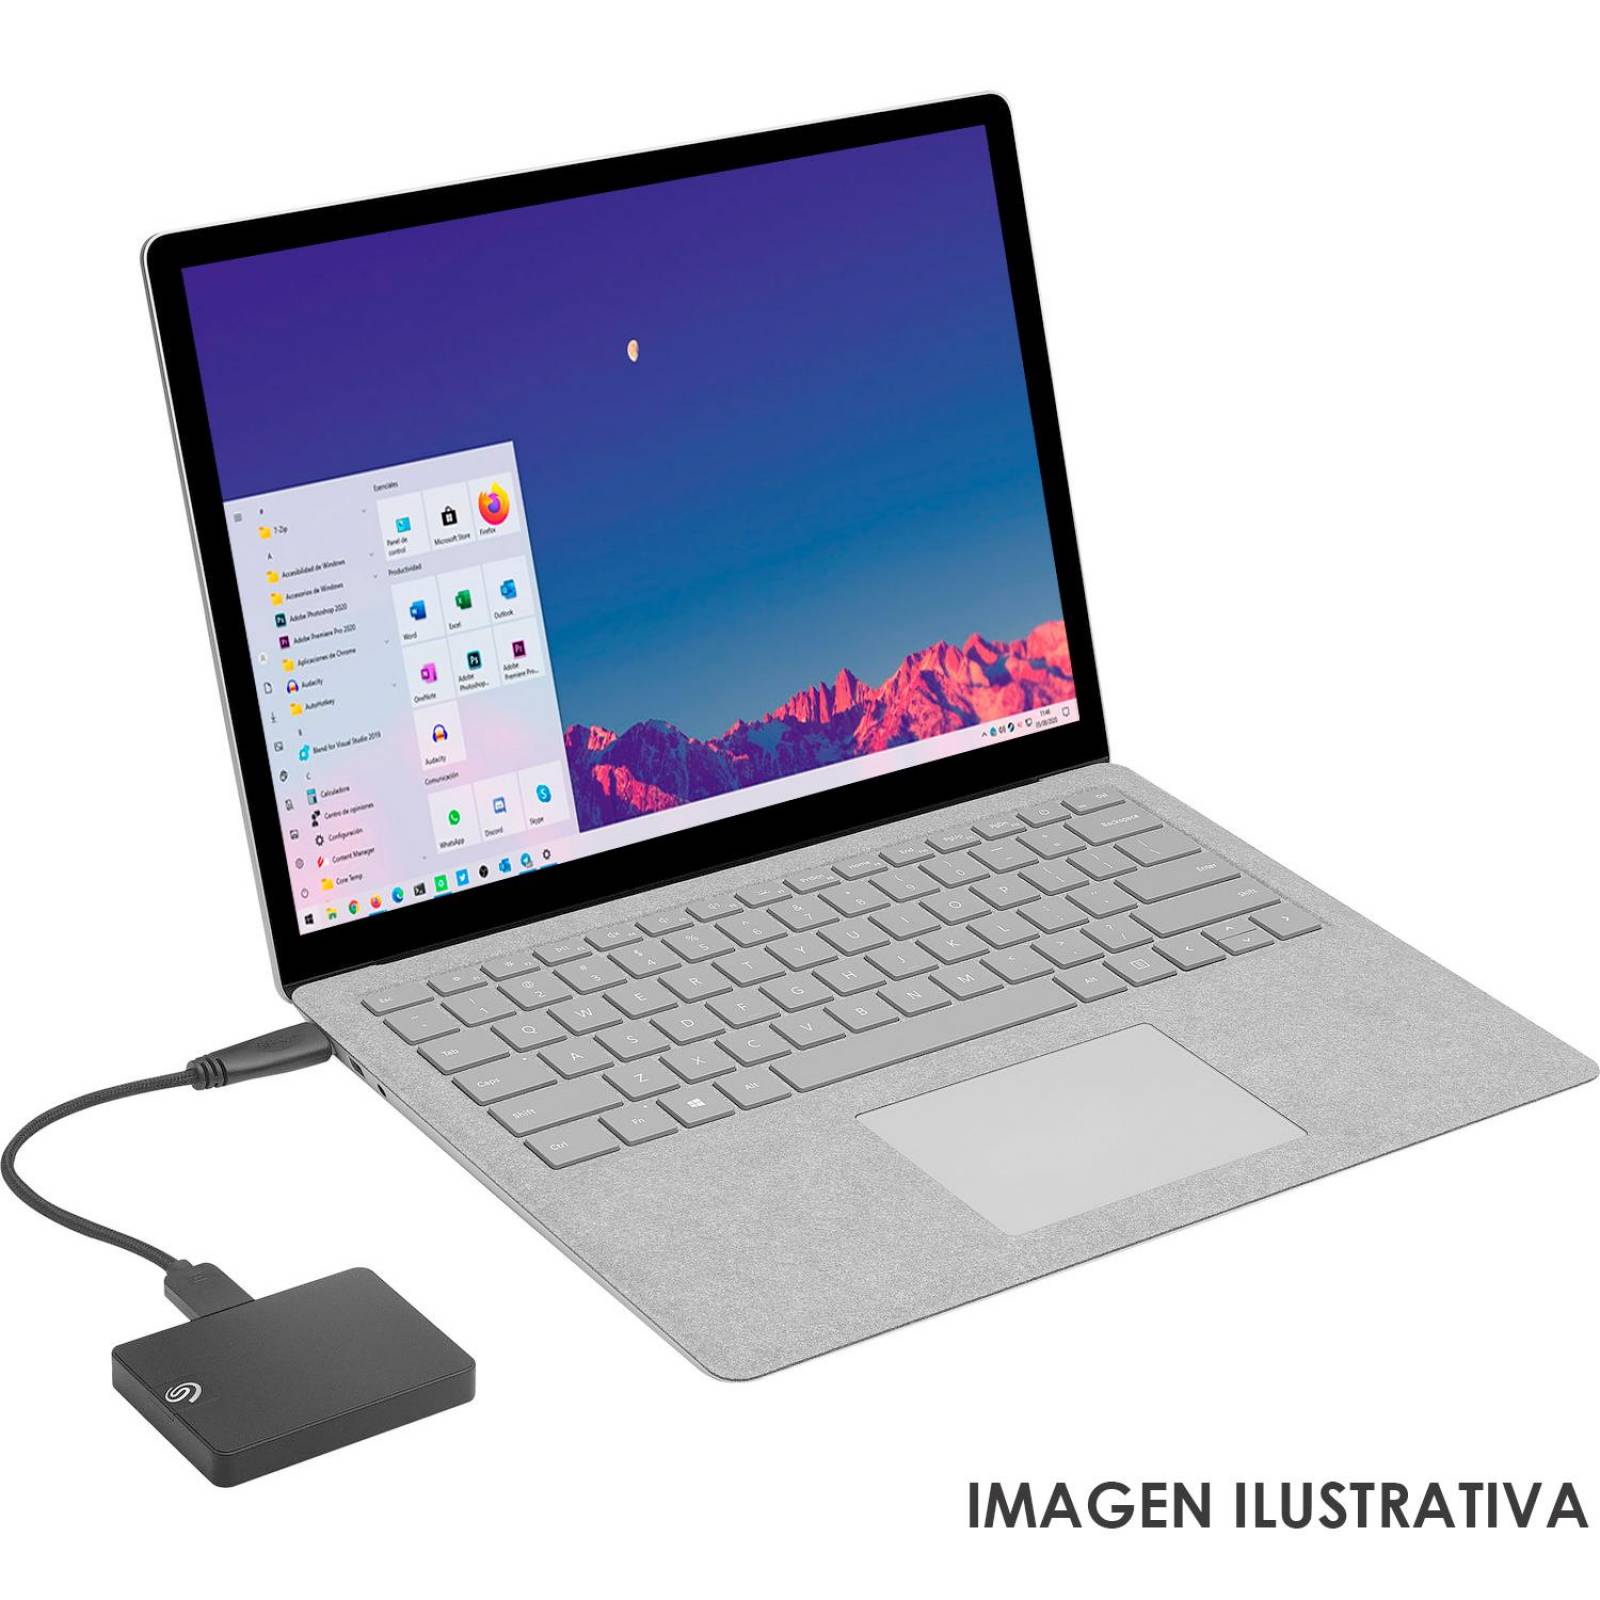 SSD 500GB SEAGATE Expansion Laptop Mac USB 3.0 STJD500400 